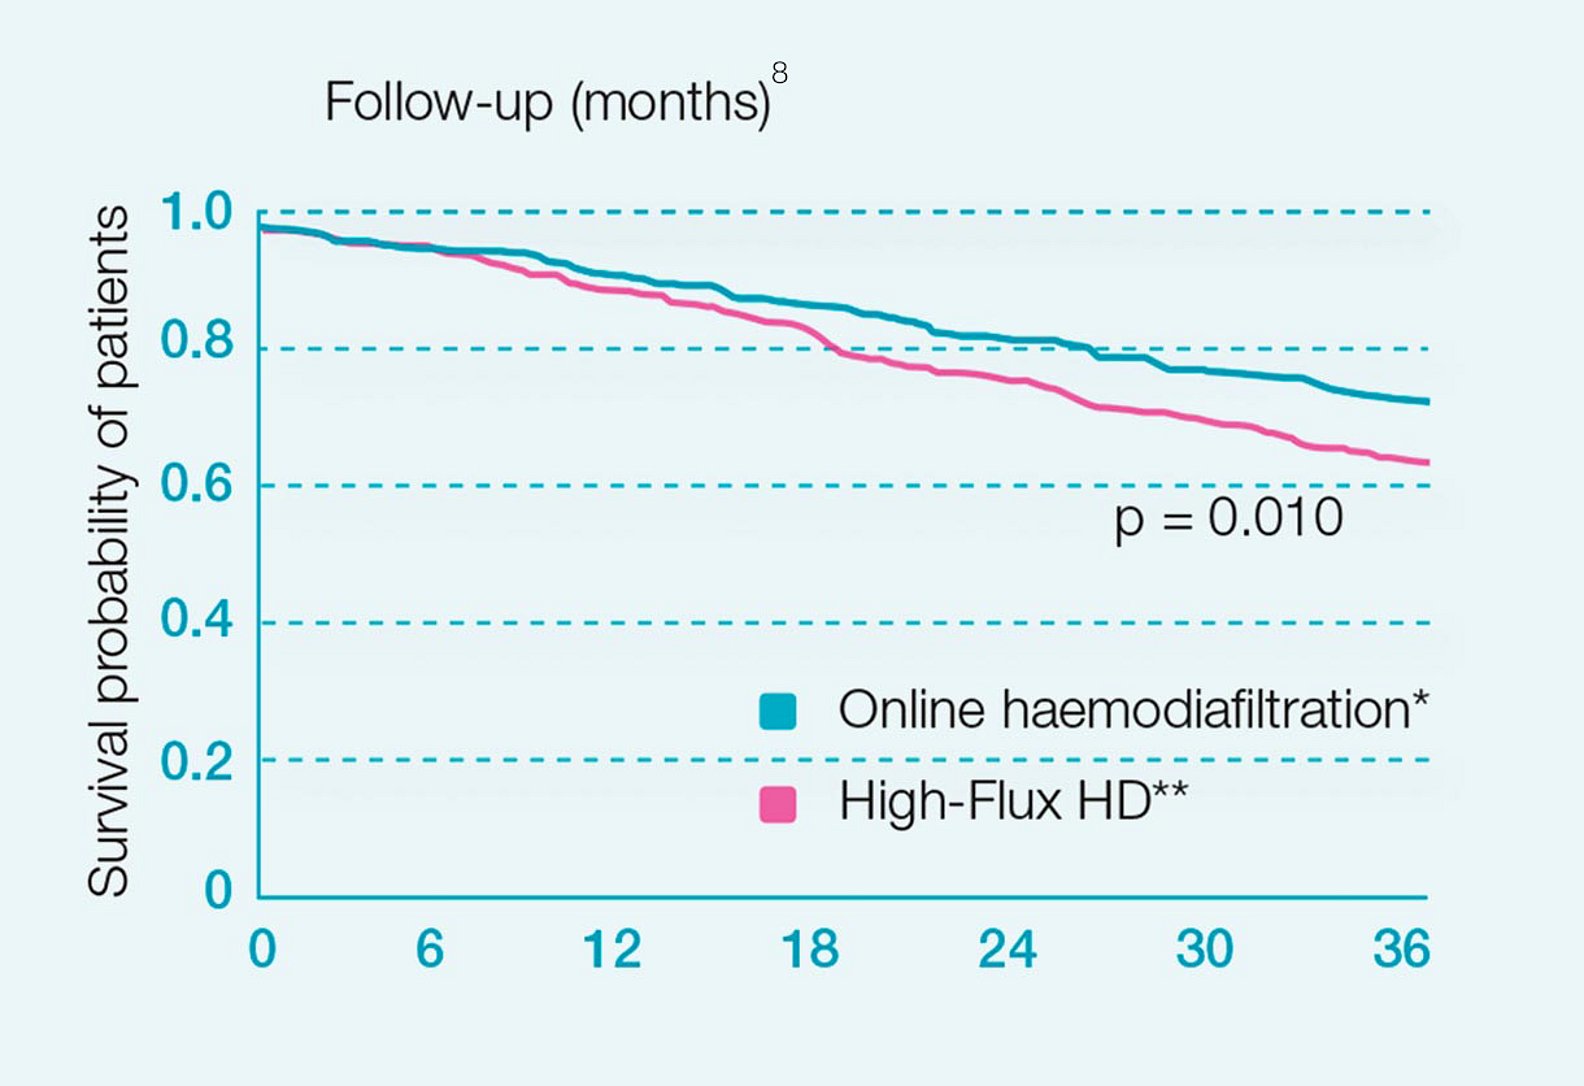 Catalonian high-volume HDF study data